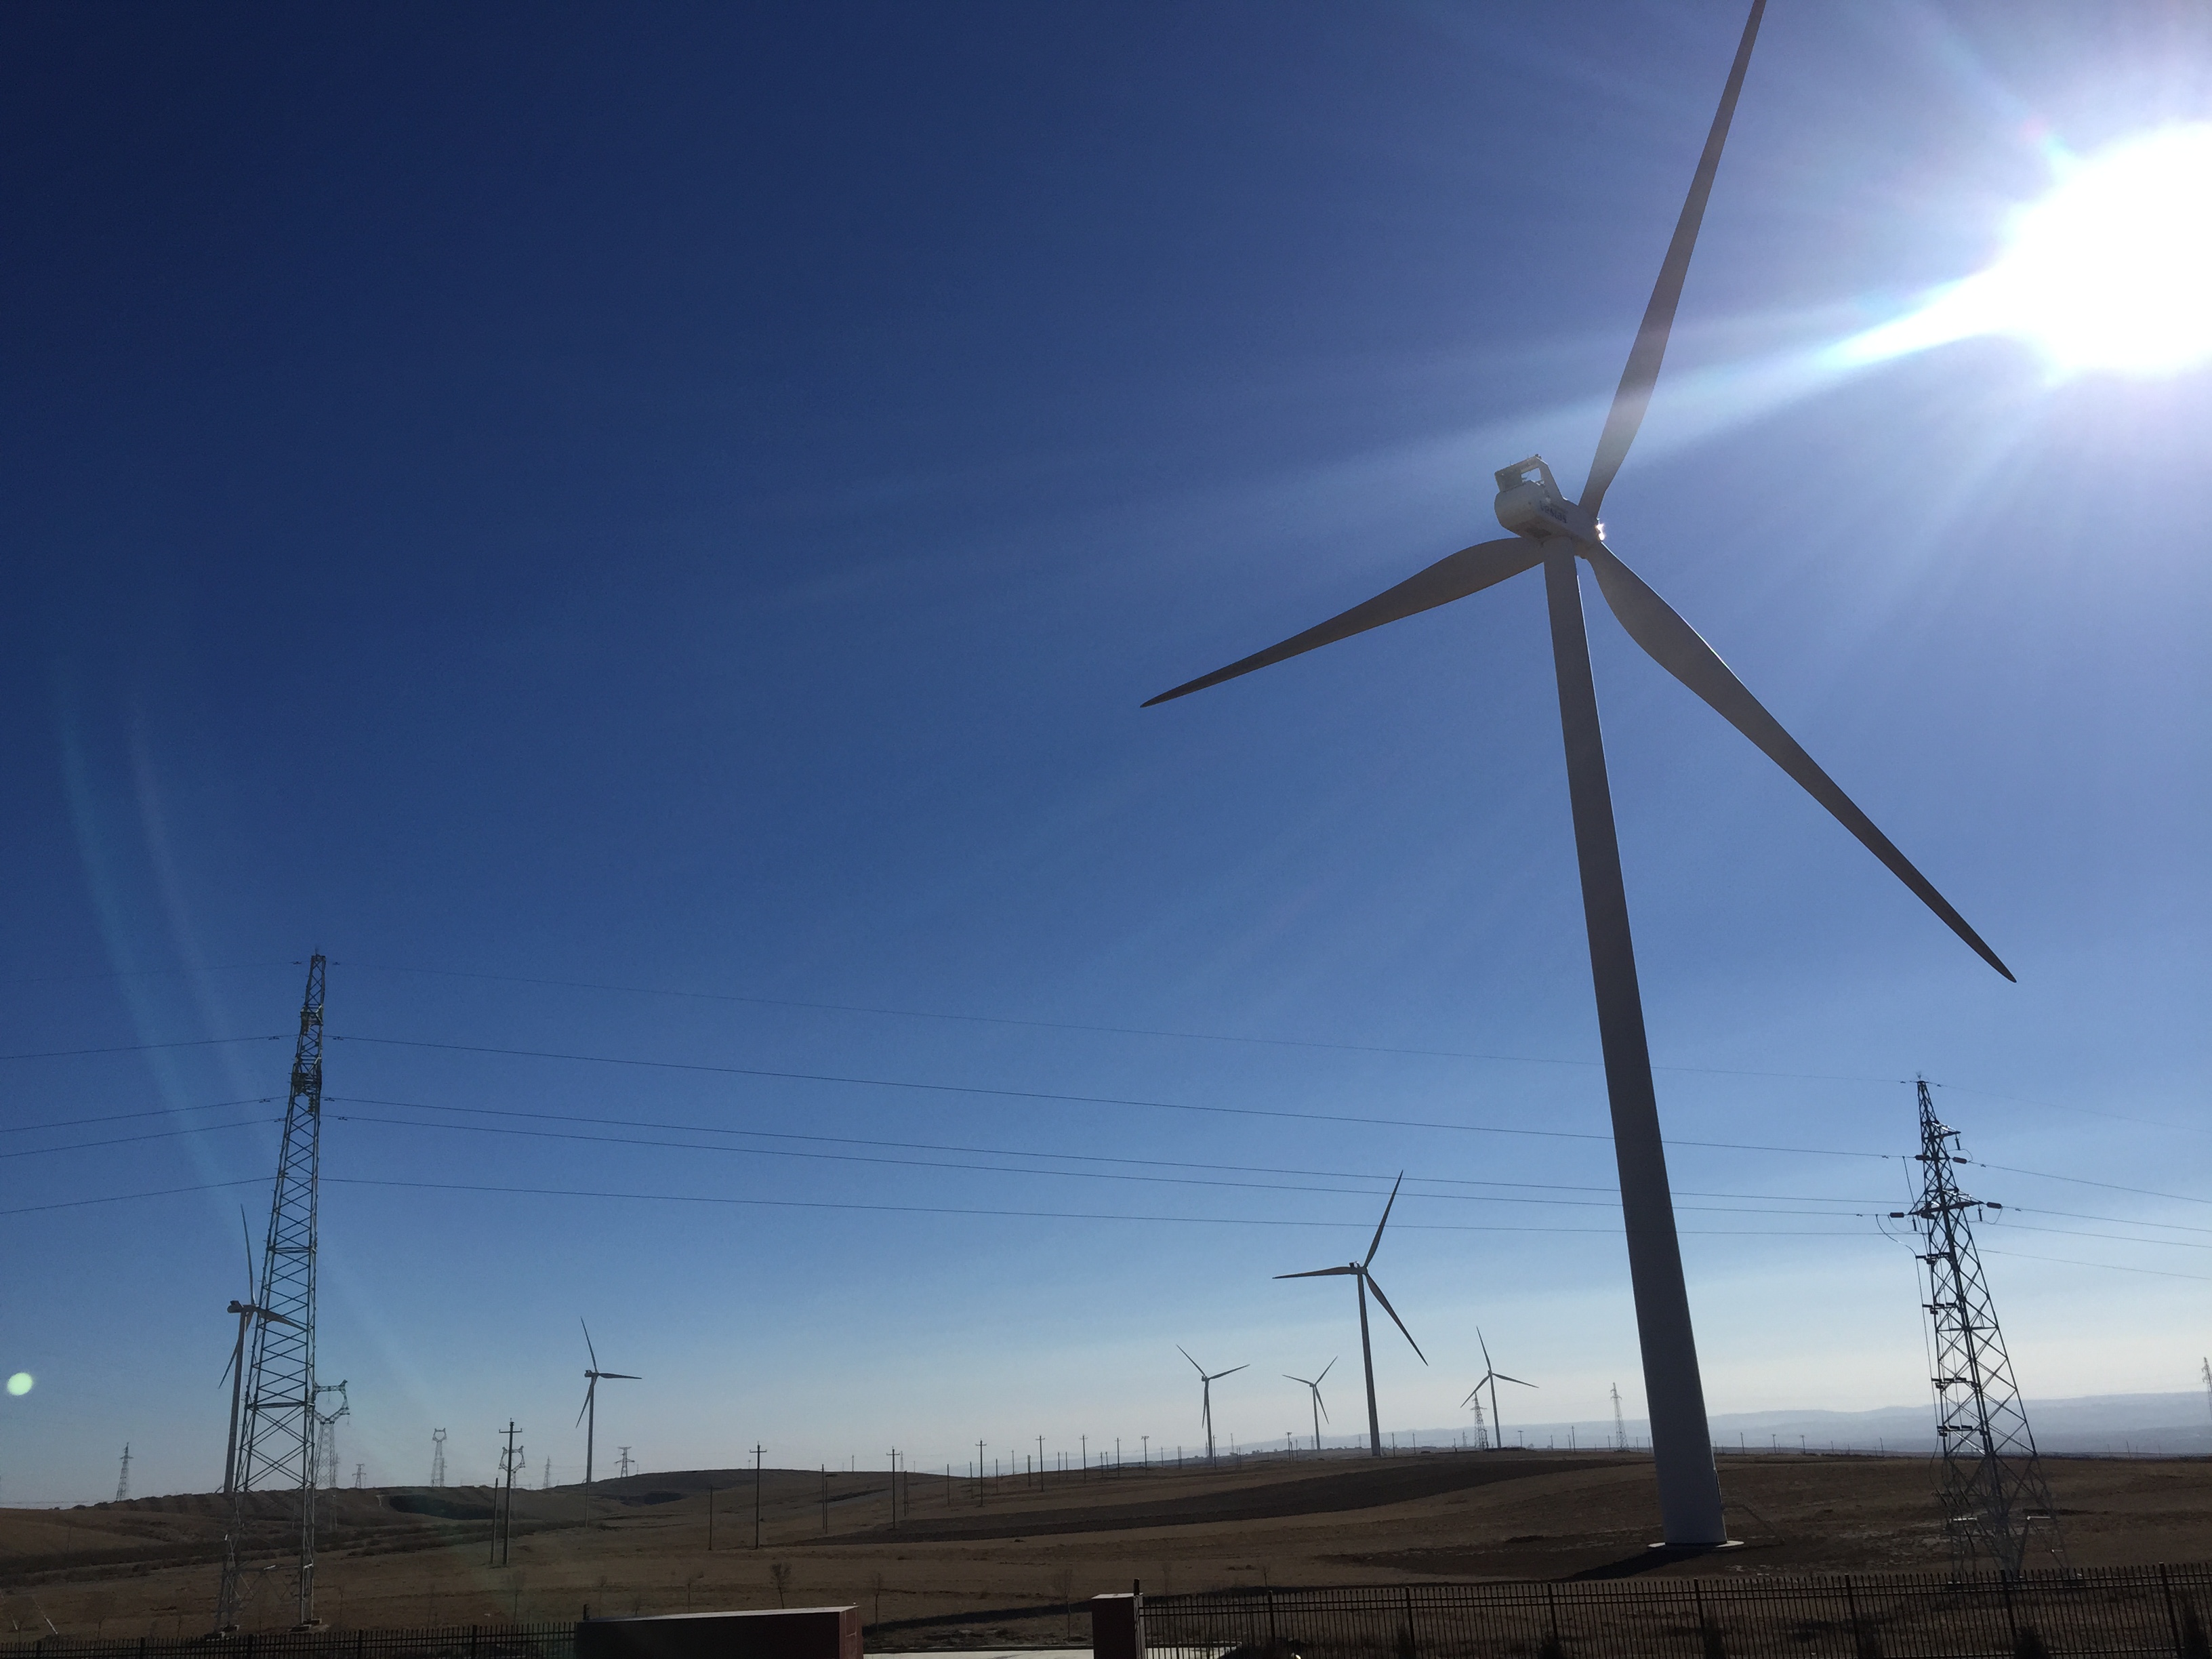 Wind Power Generation Project